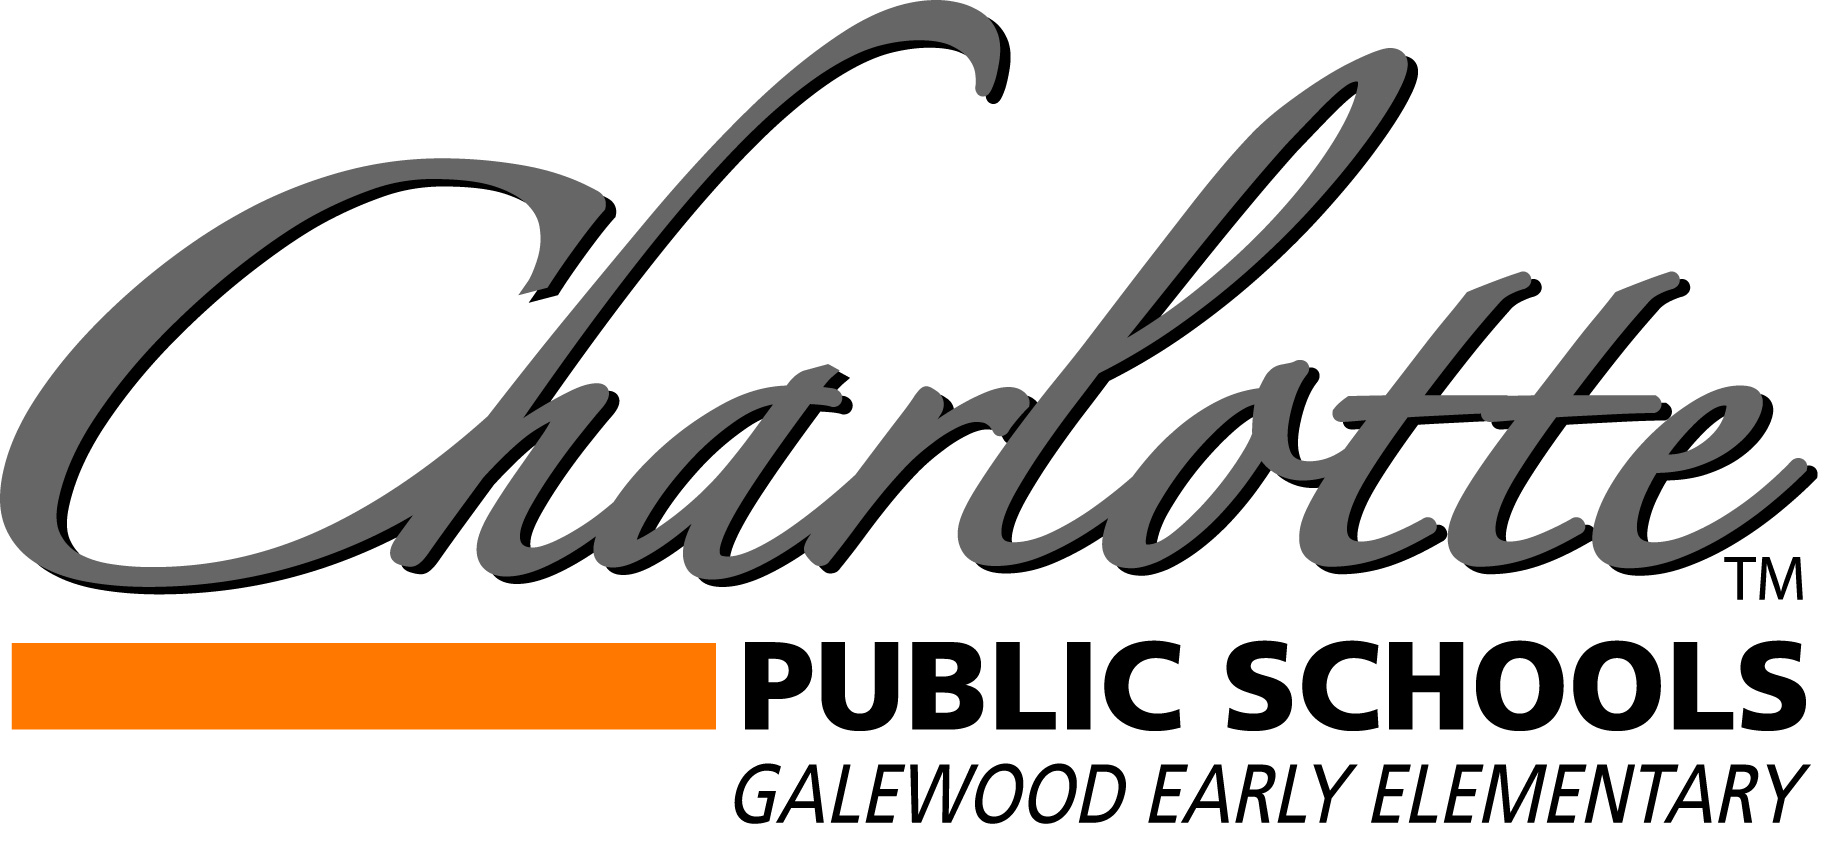 Charlotte Public Schools Galewood Early Elementary